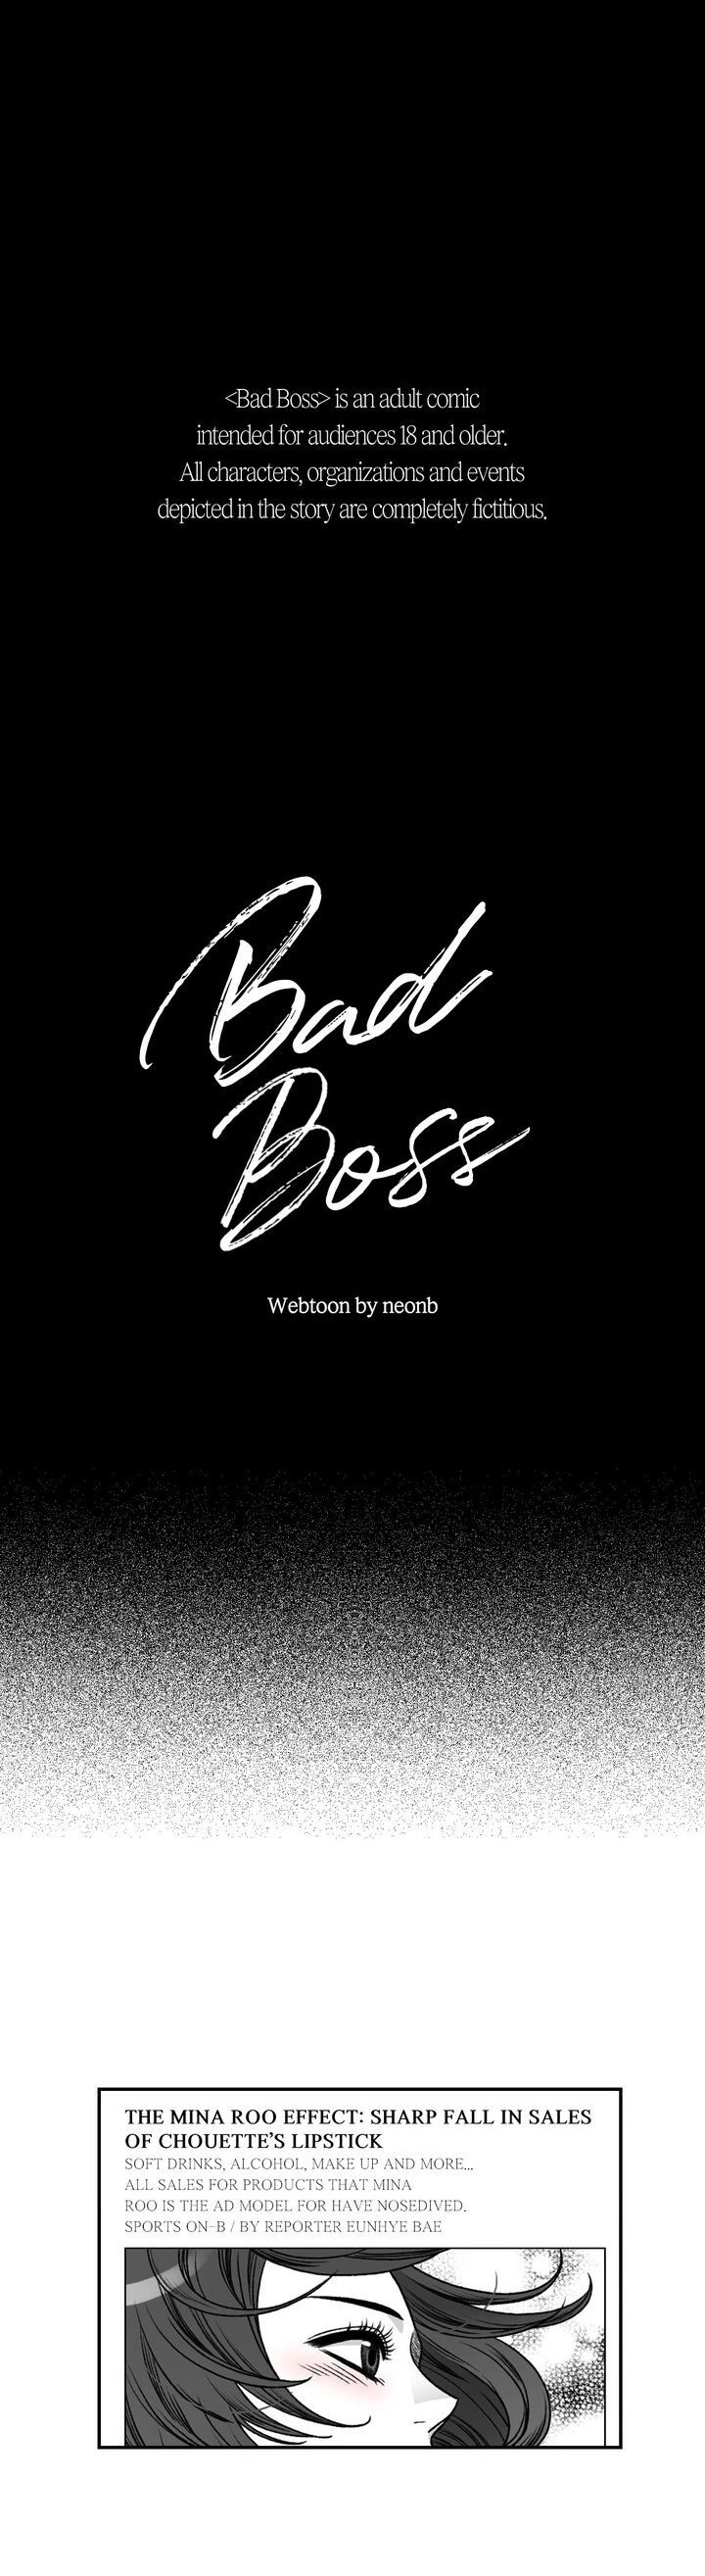 Bad Boss image